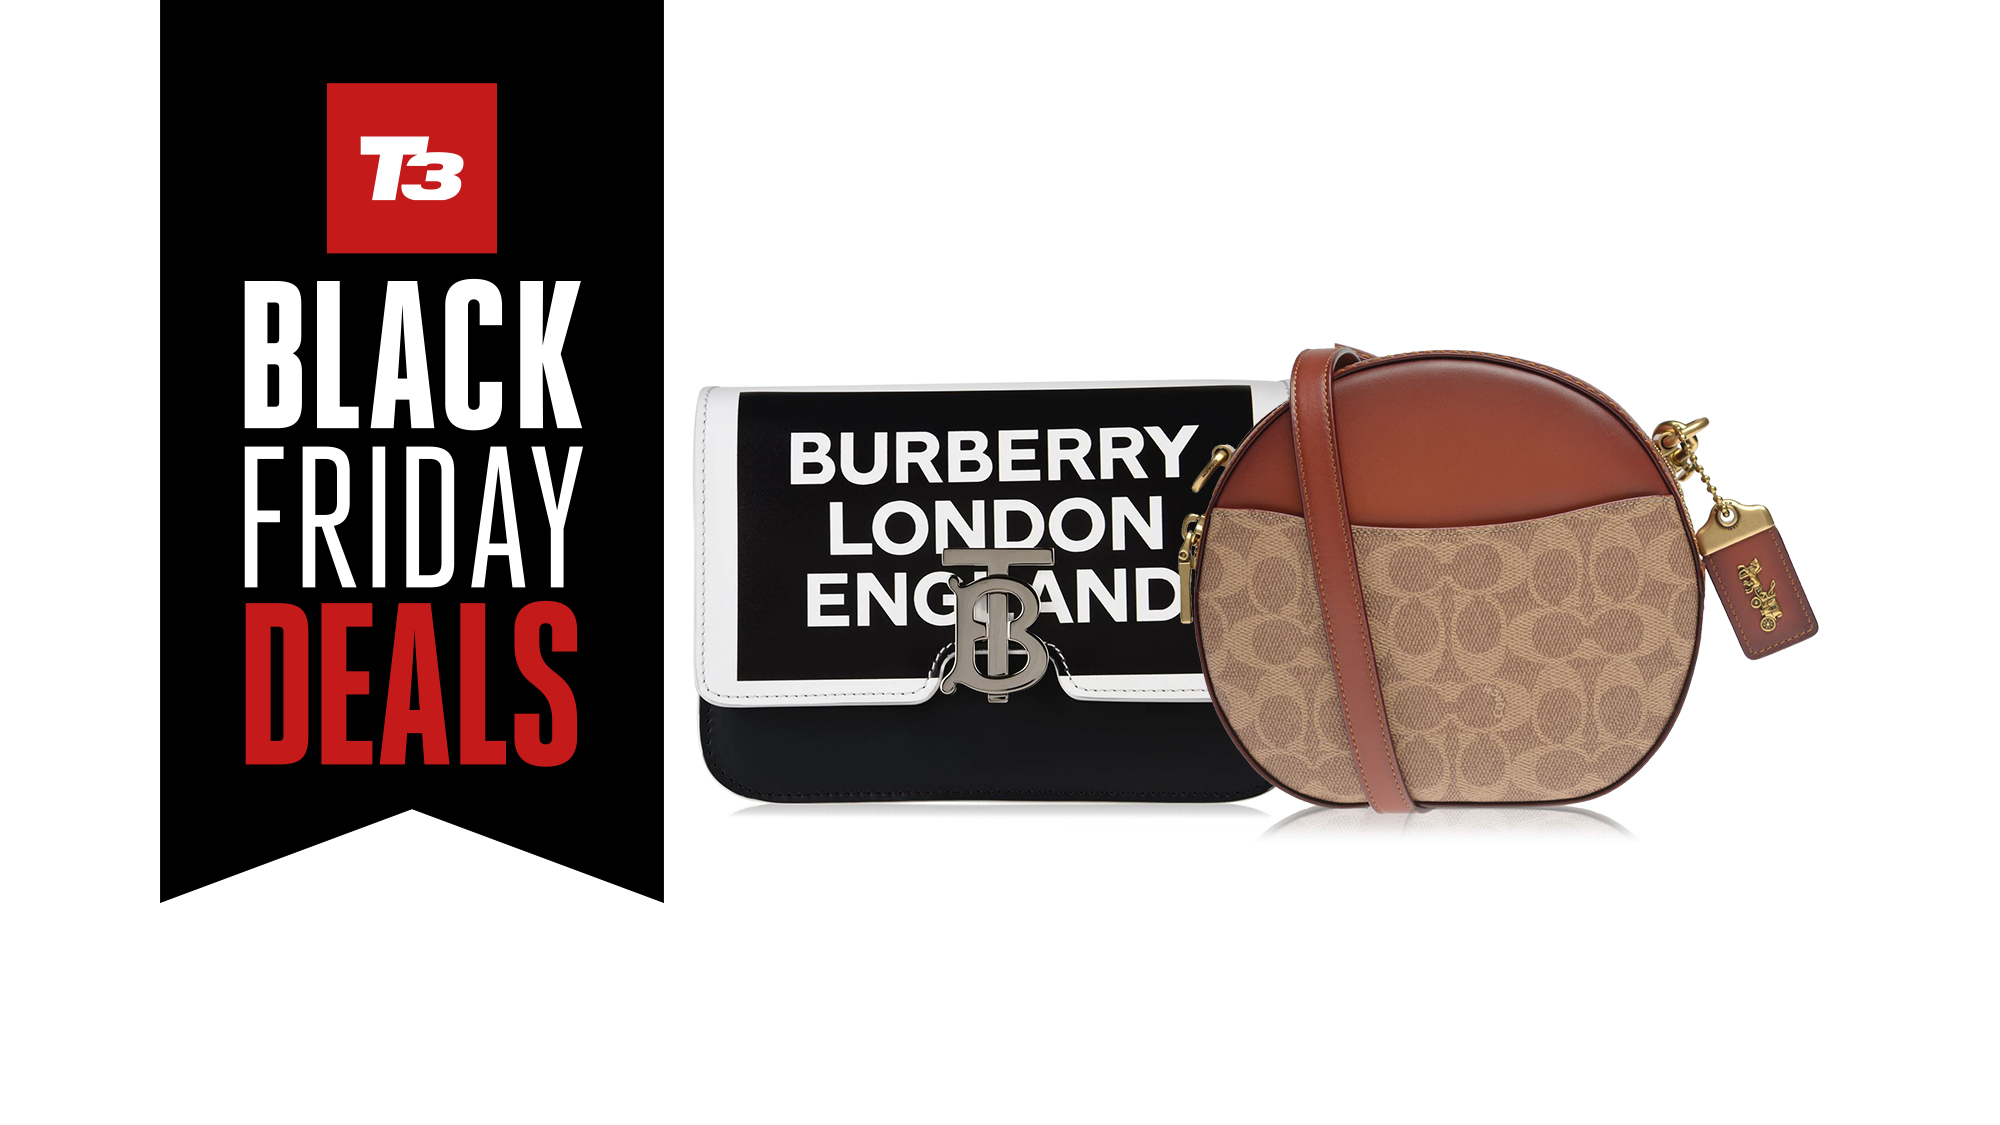 Black Friday handbags deals: save on 